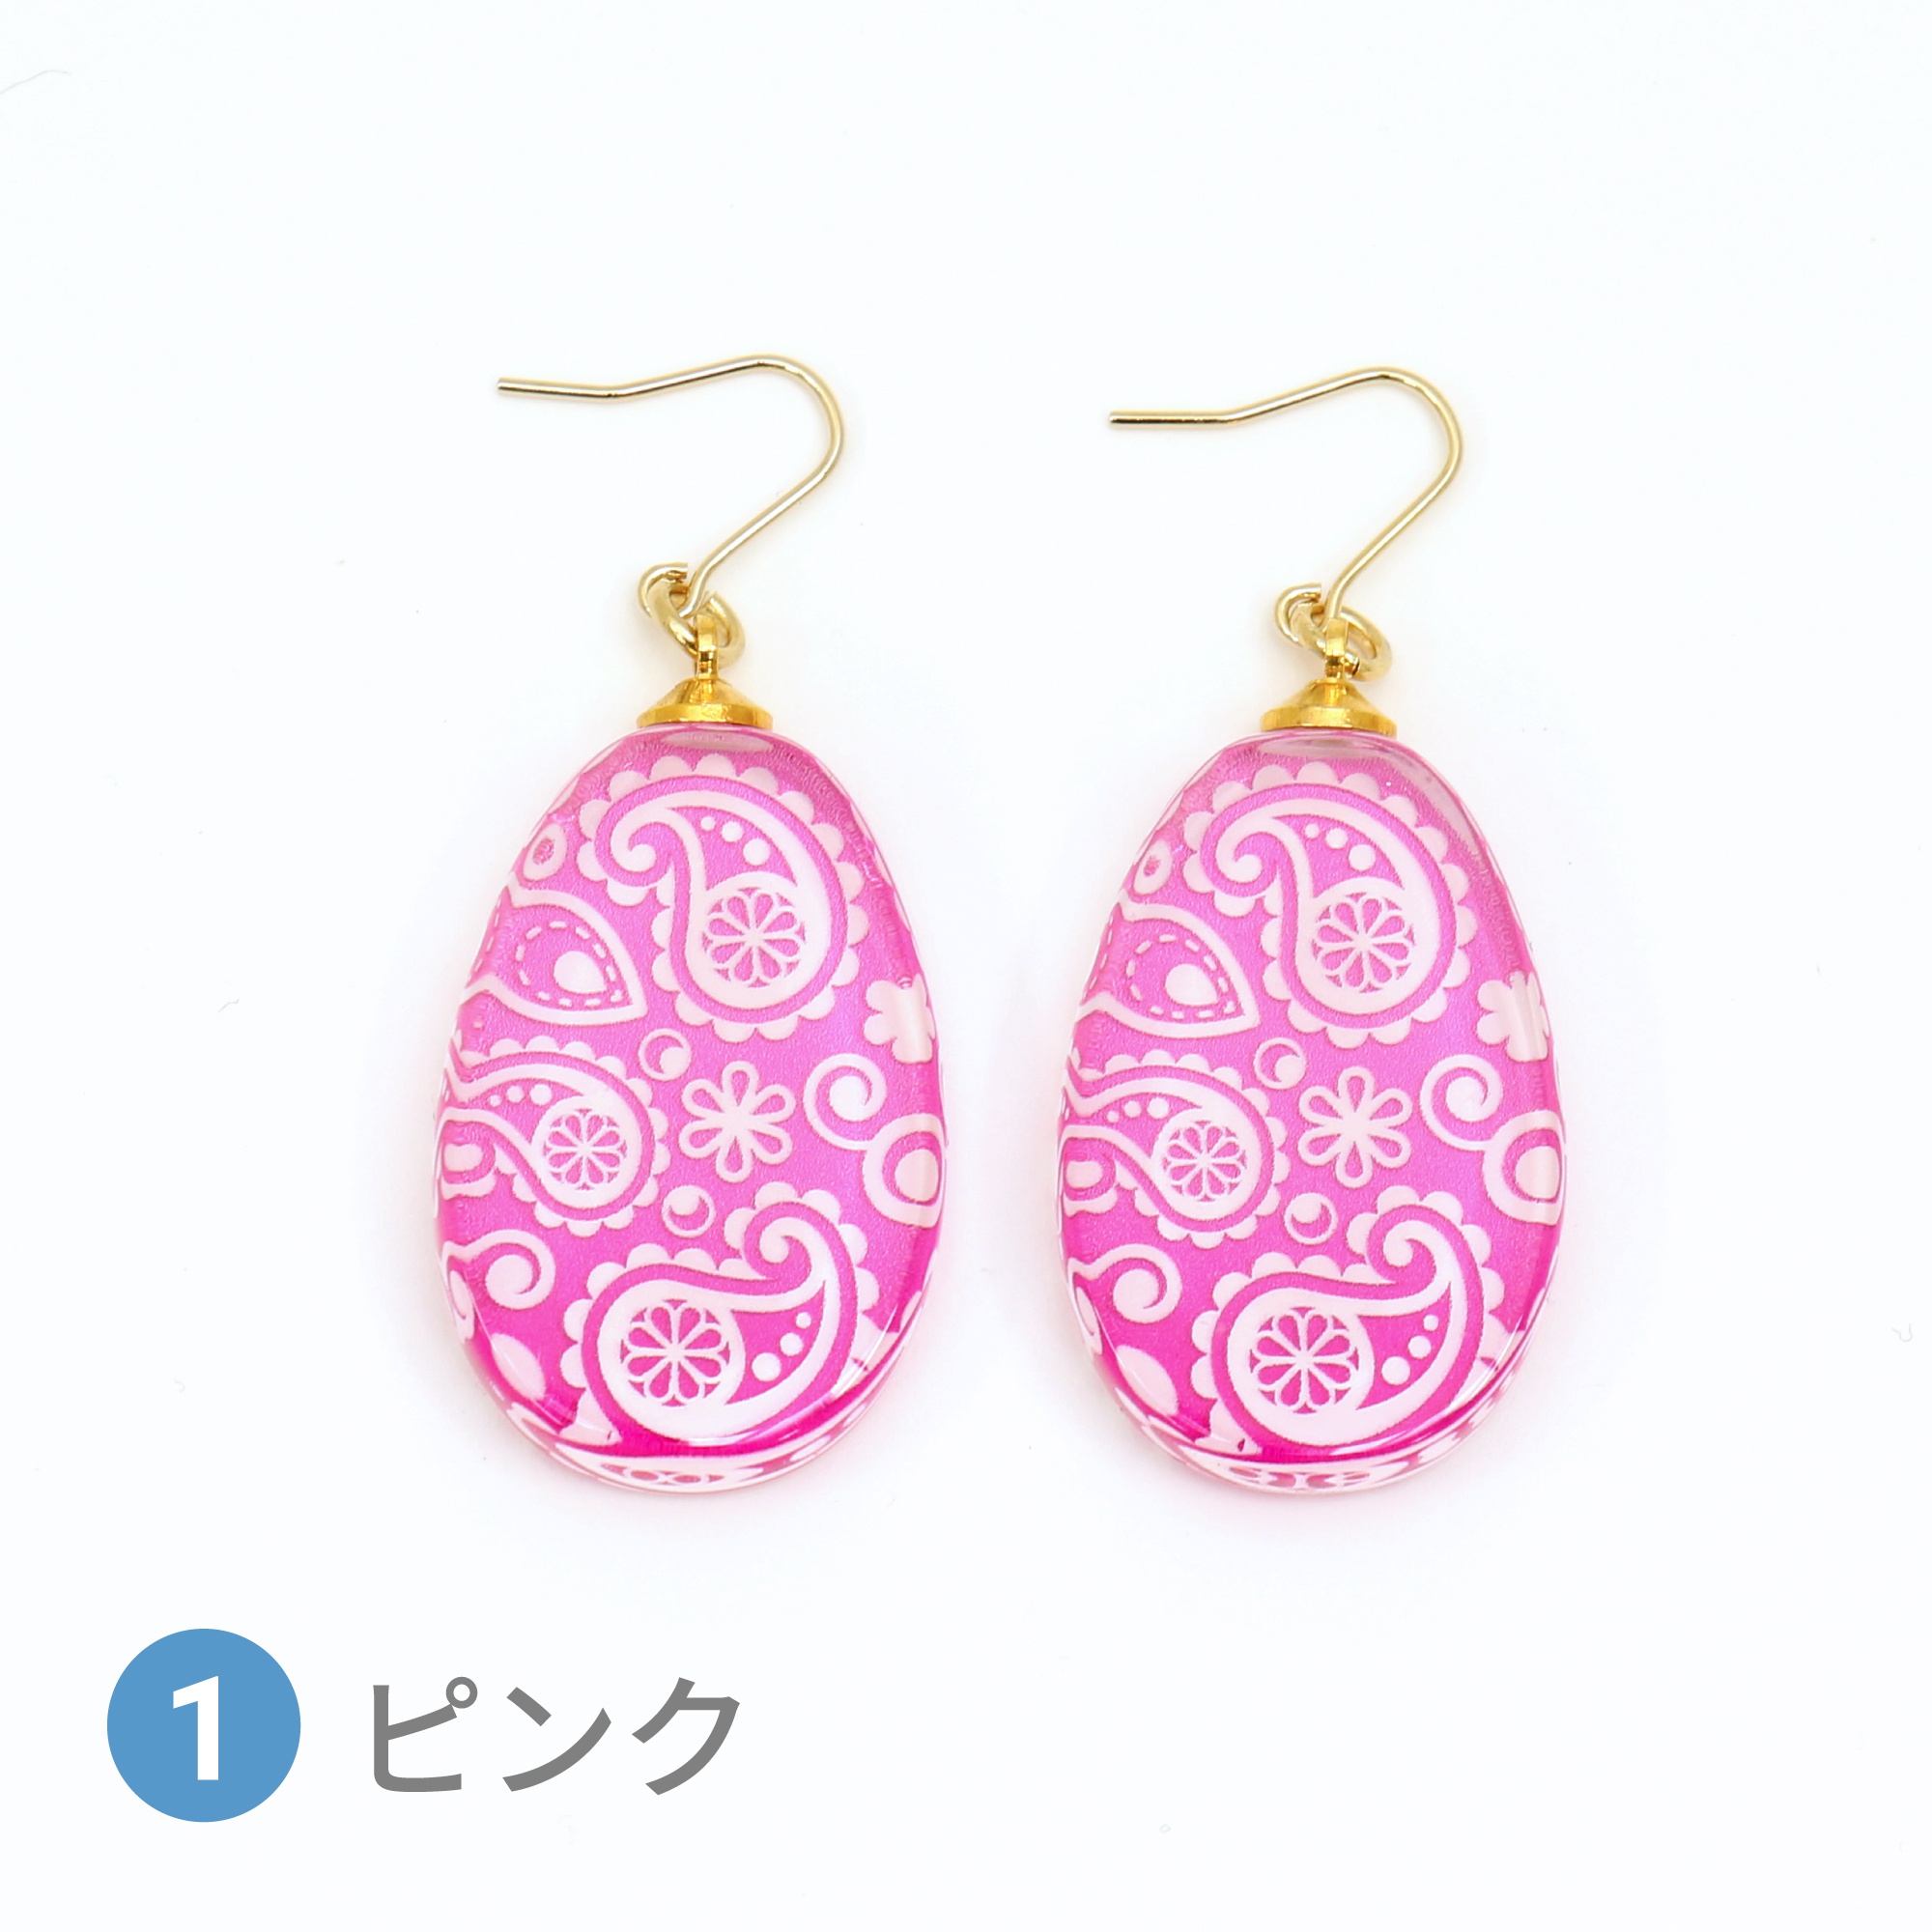 Glass accessories Pierced Earring PAISLEY pink drop shape